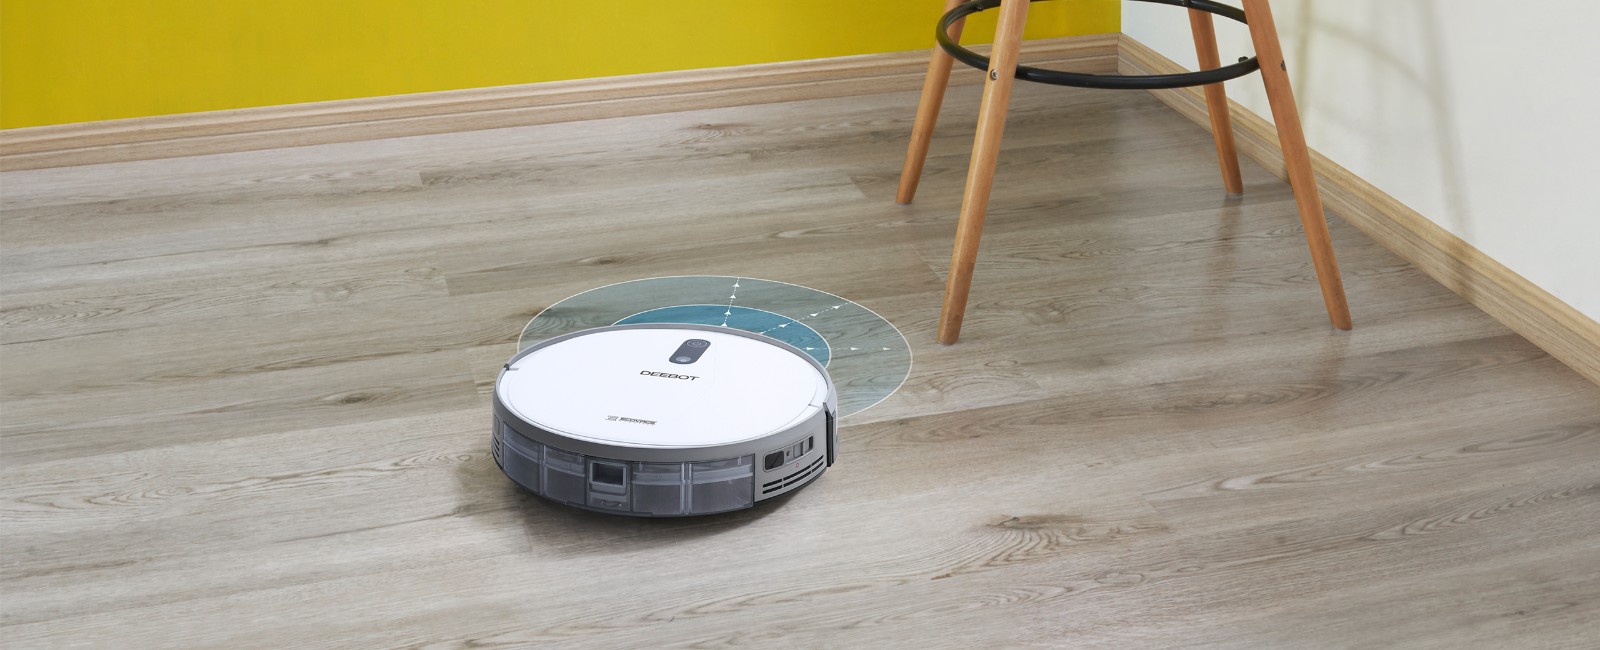 Deebot 710 Robot Vacuum Cleaner - Click to Enlarge